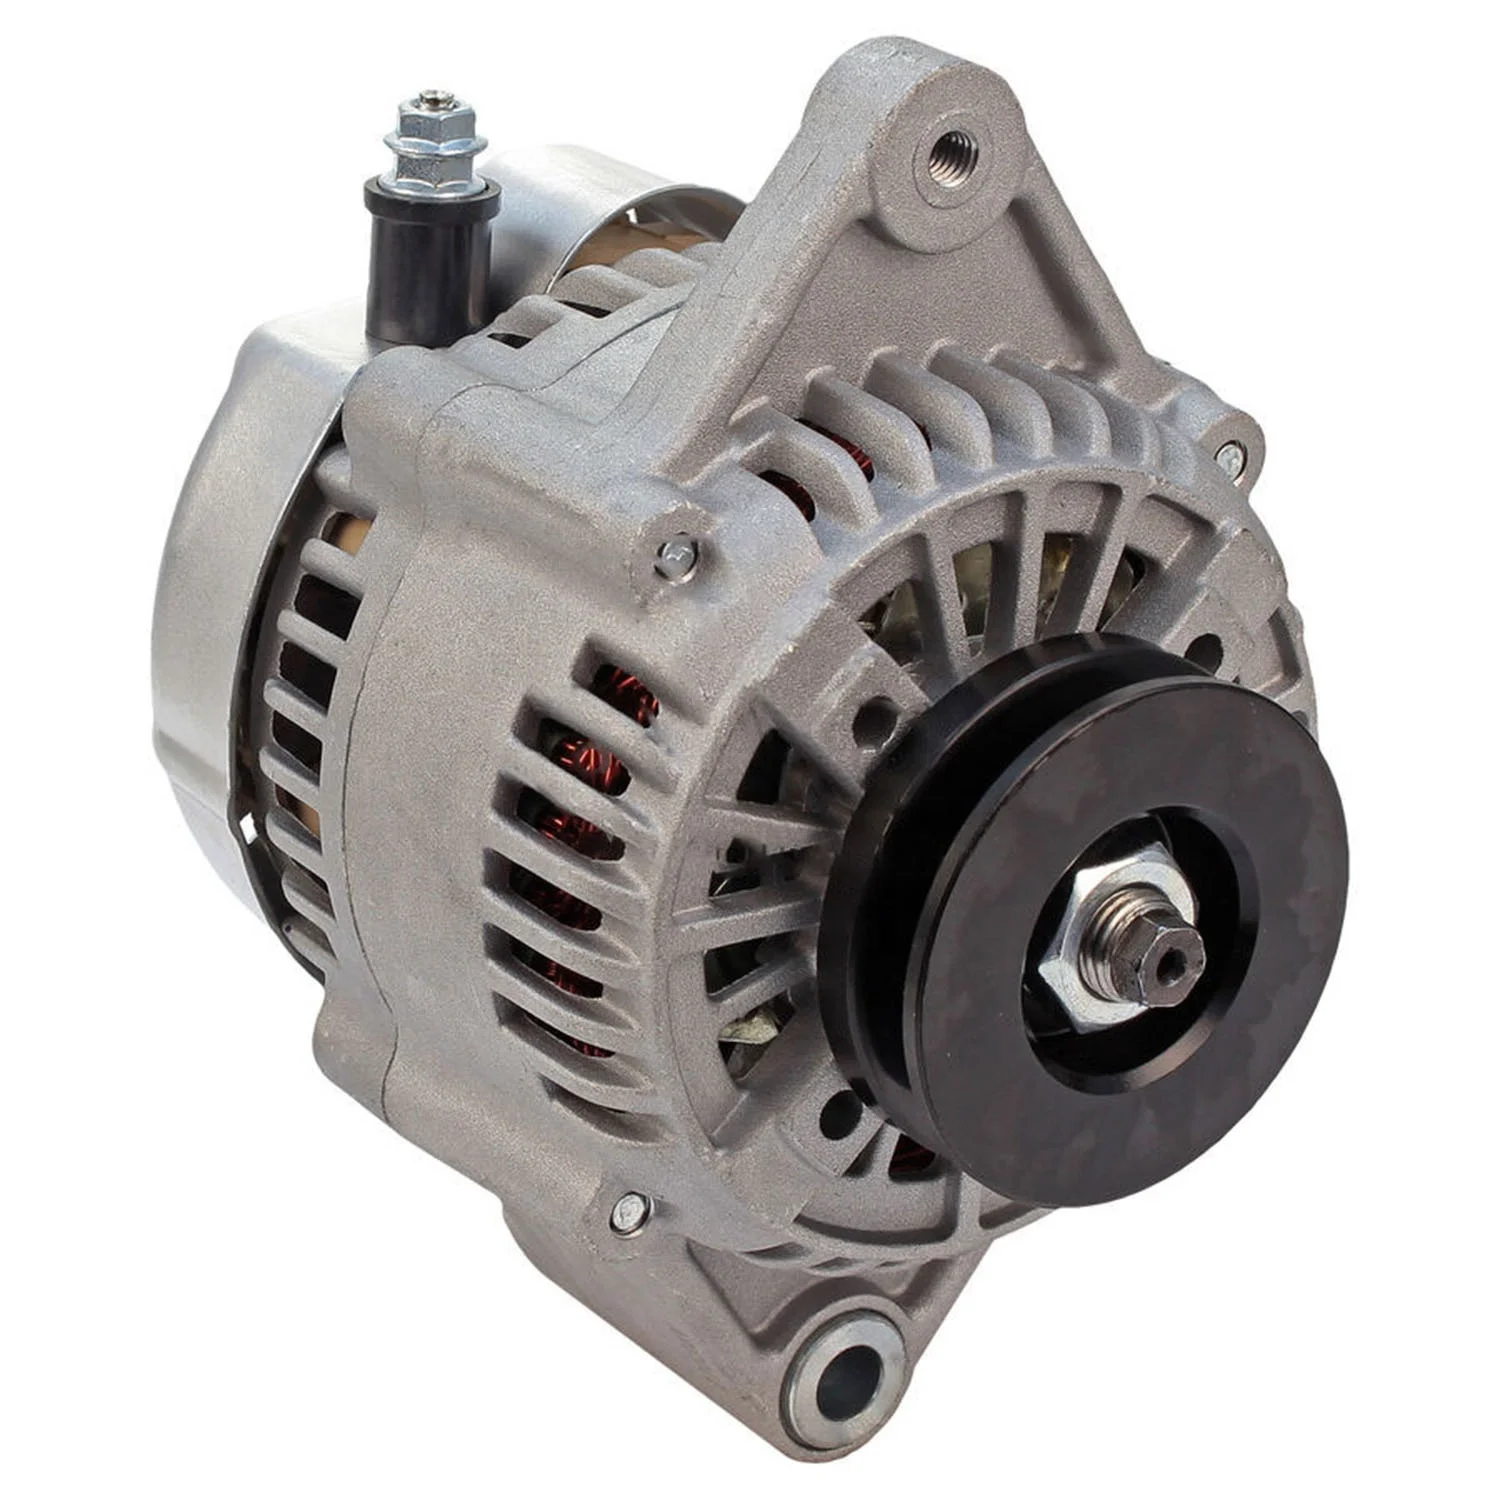 

Auto Dynamo Alternator Generator For DENS Kubot 1022116060 ALN1571LK K771161900 K771161901 11634N